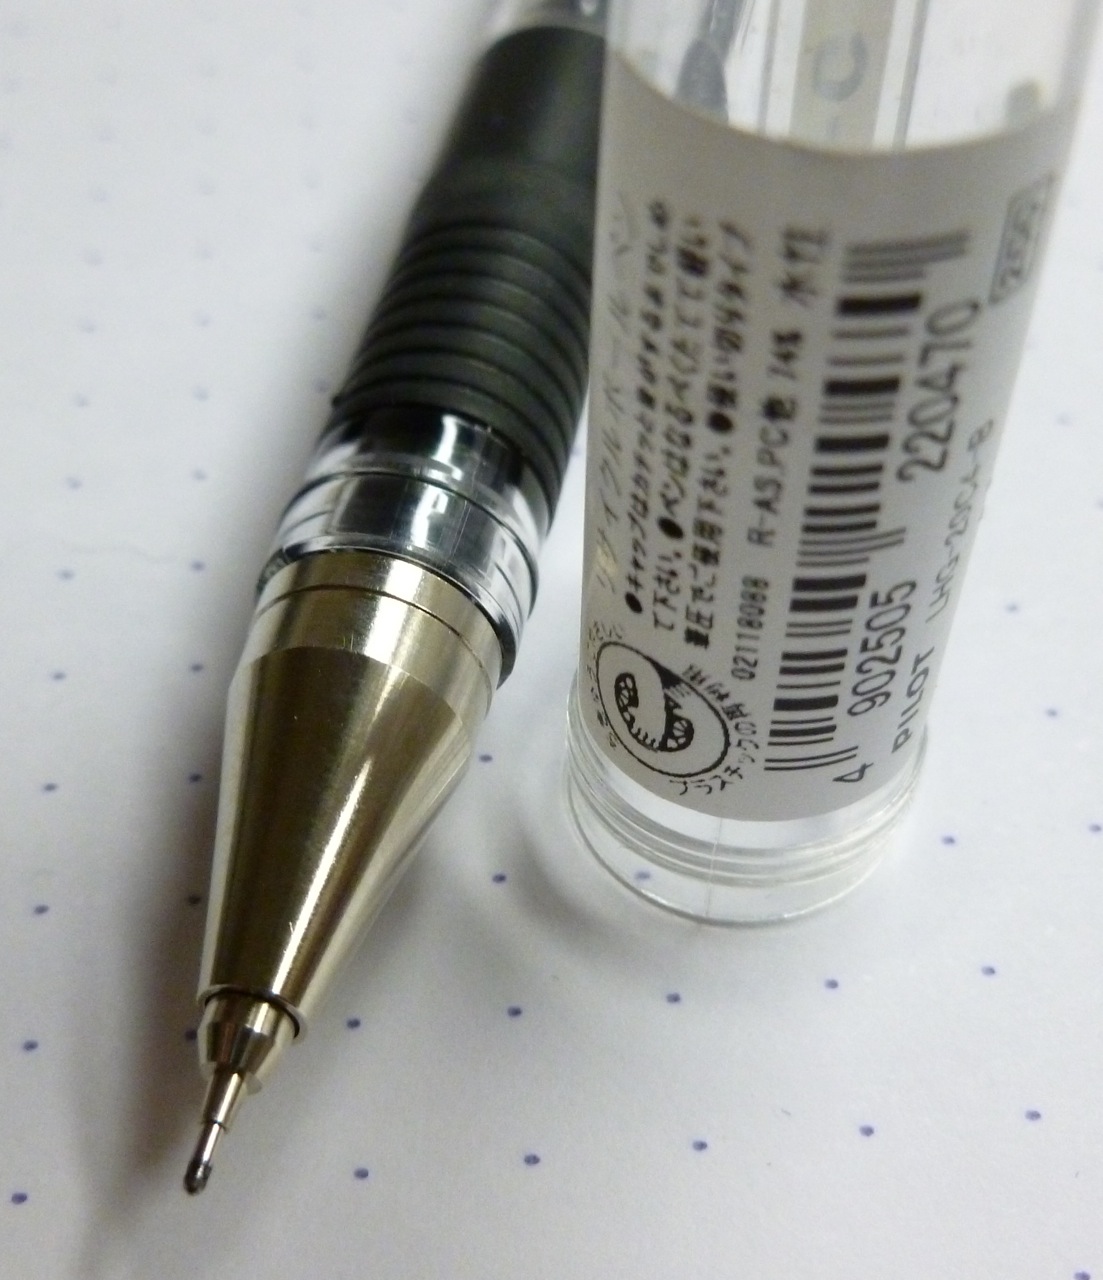 TUL Fine Liner Felt Tip Pens Ultra Fine 0.4 mm Silver Barrel